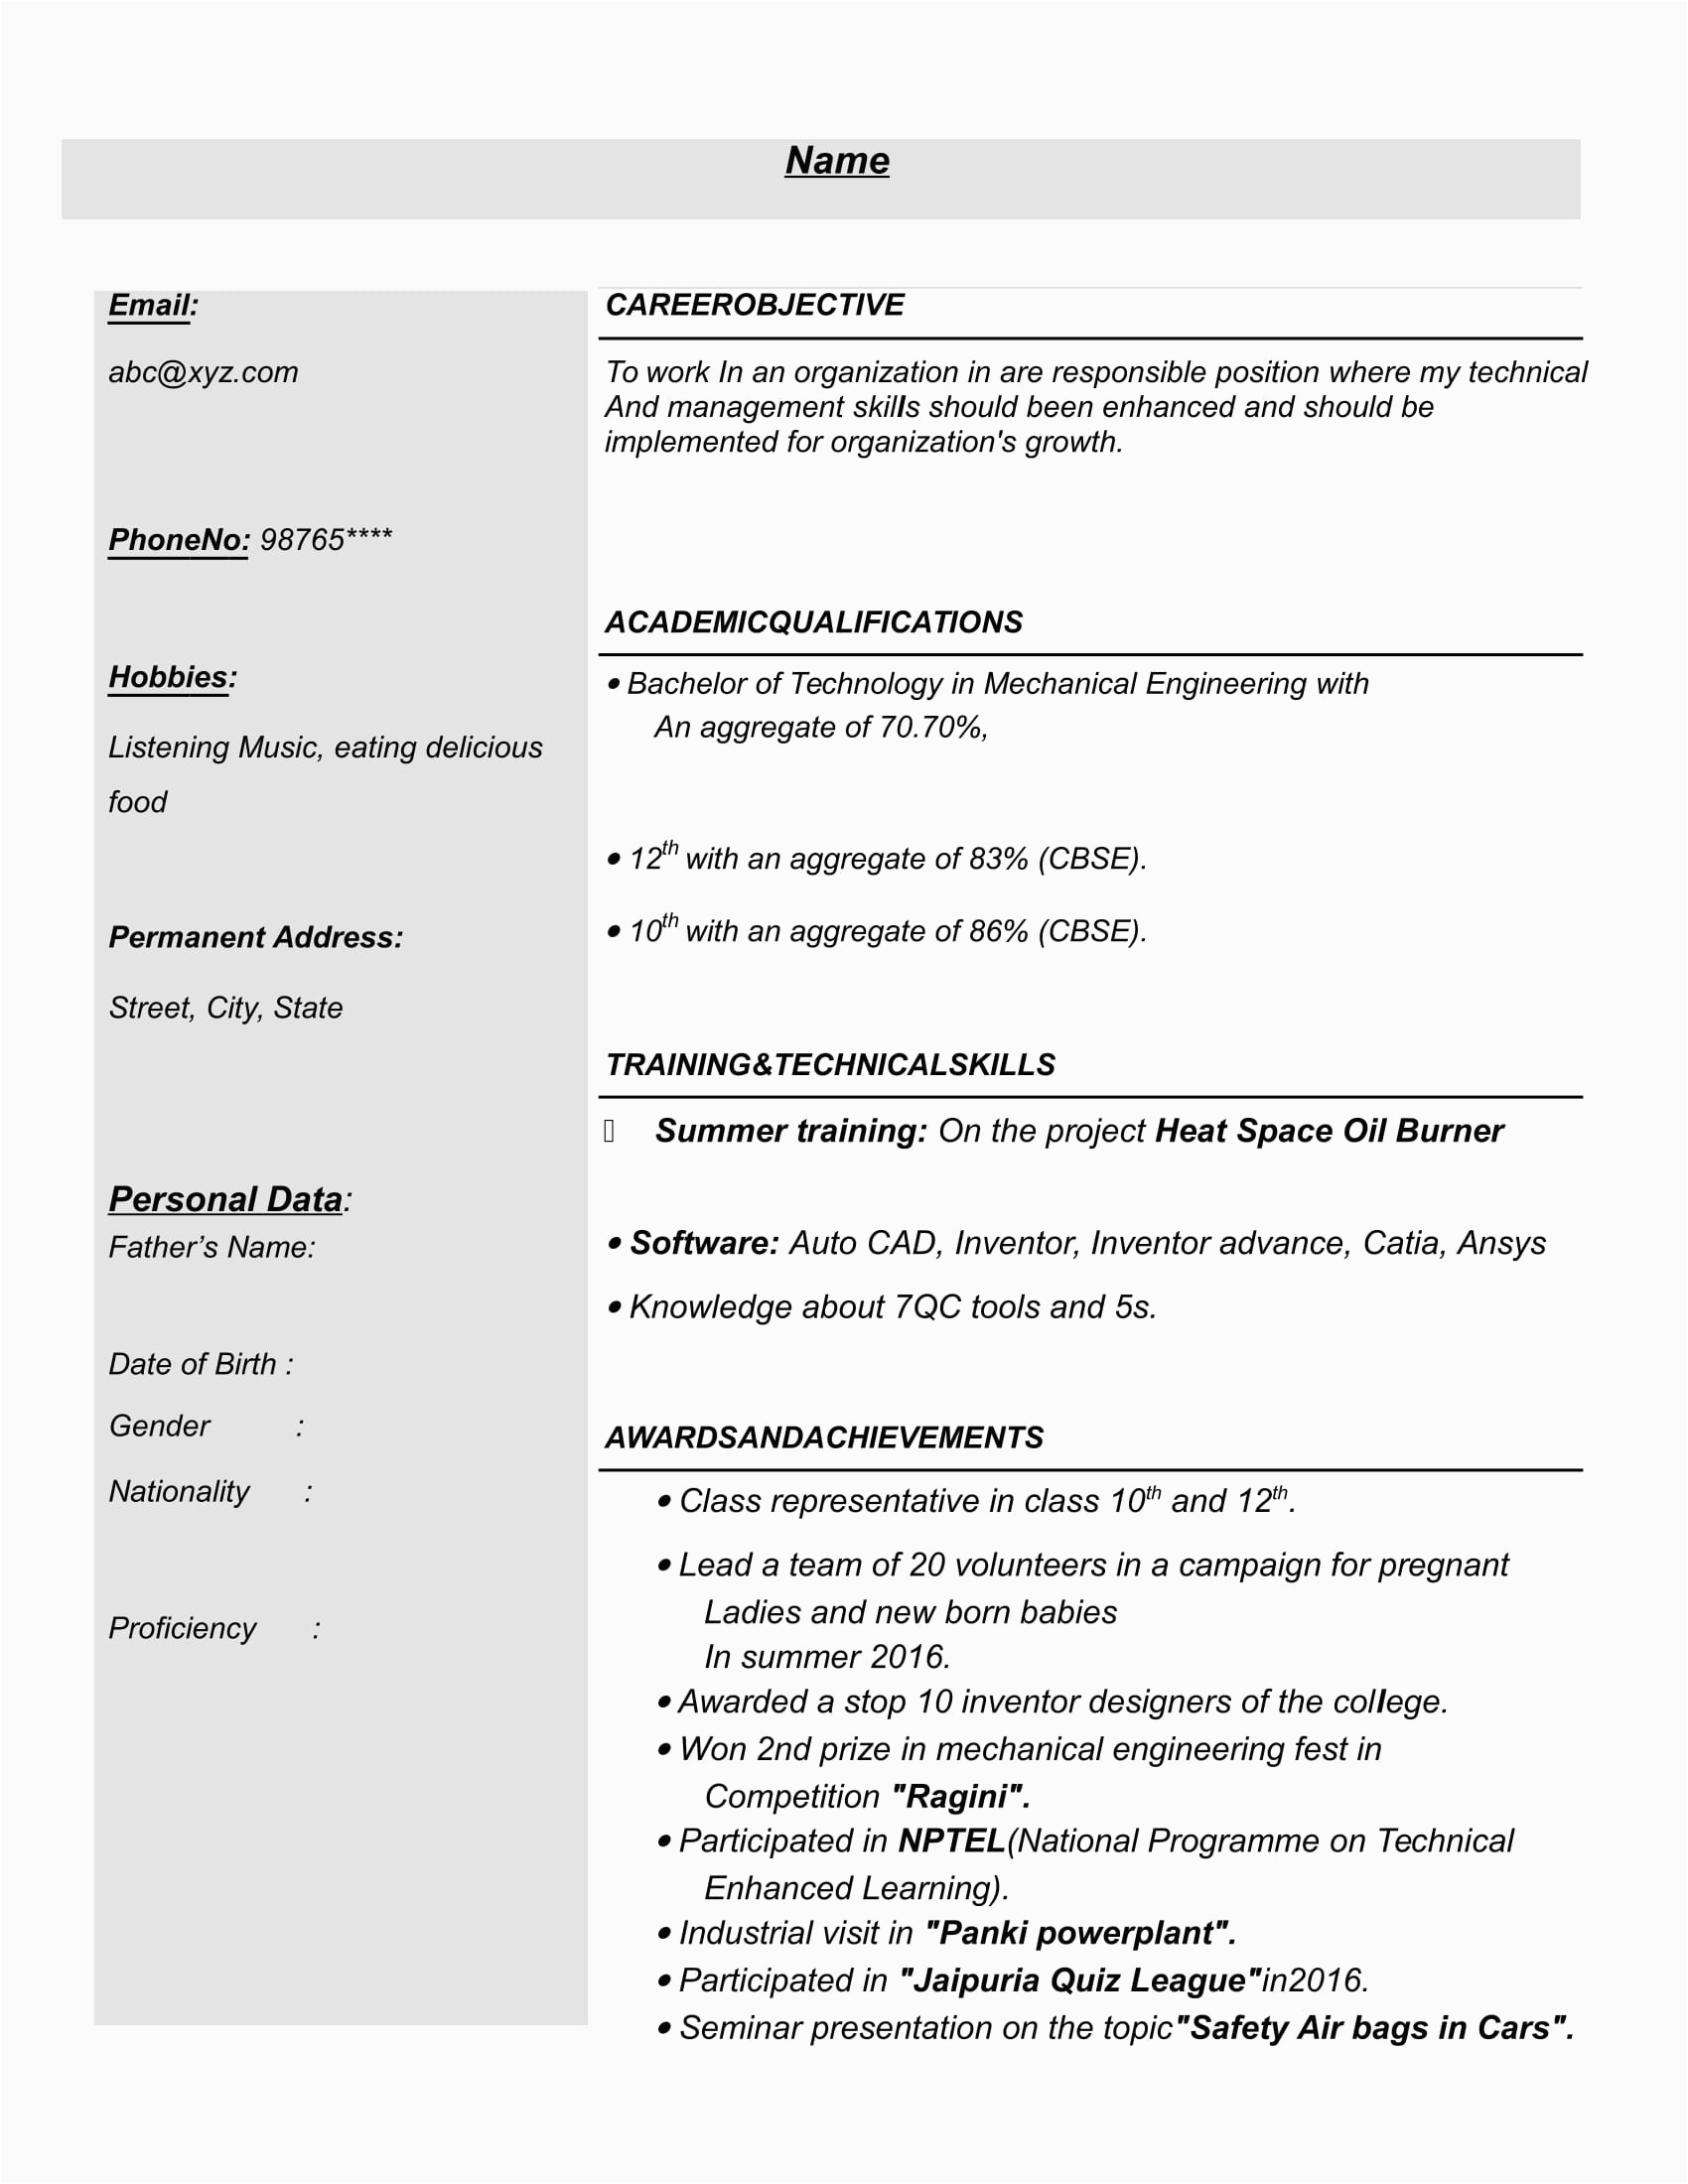 Sample Resume for Industrial Engineer Fresher Cv Sample for Mechanical Engineer Fresher June 2020